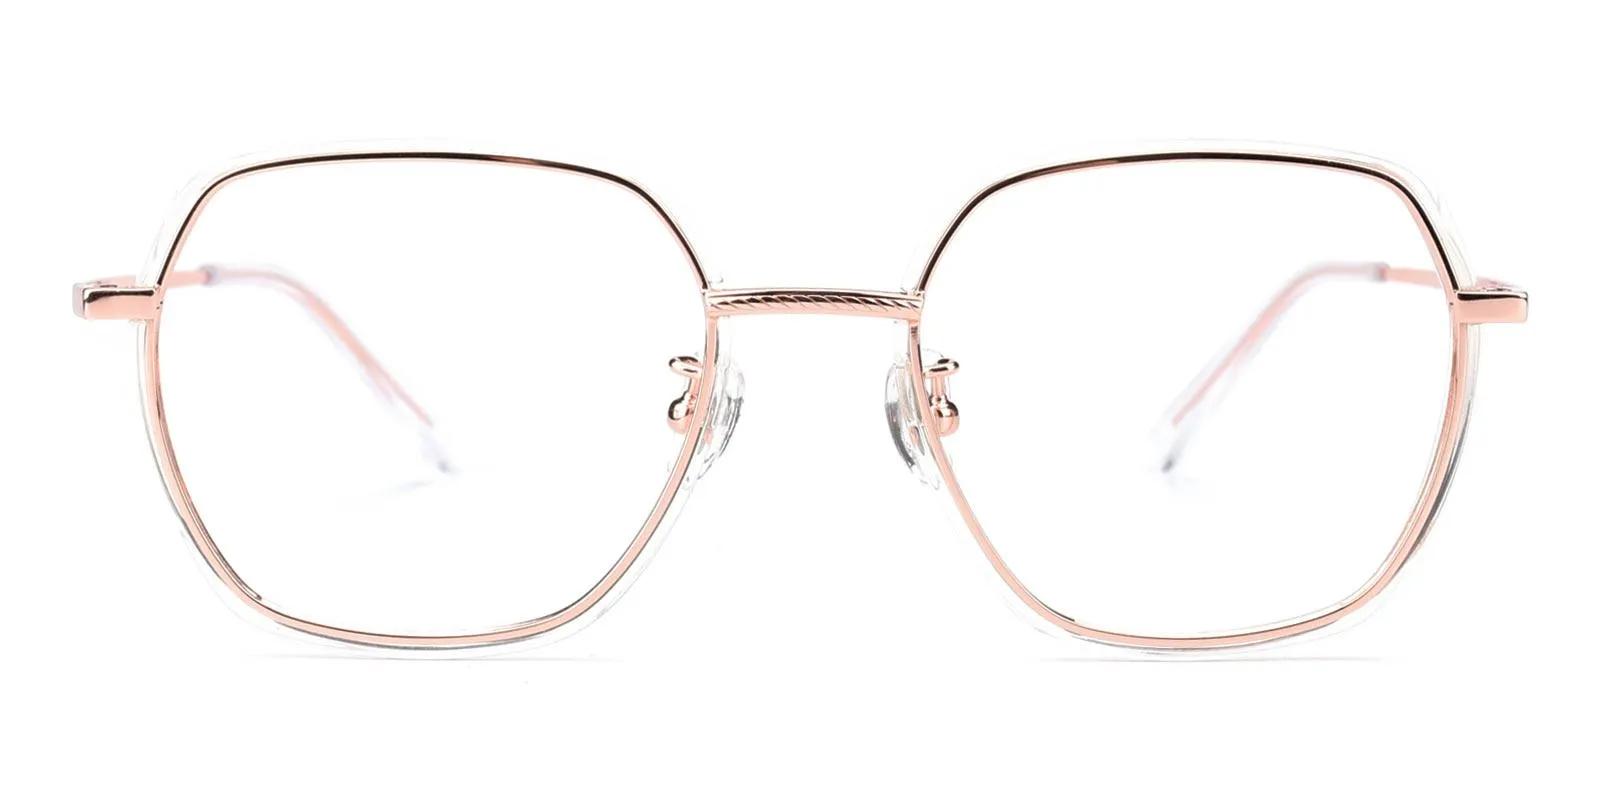 Visitty Fclear Titanium , TR Eyeglasses , NosePads Frames from ABBE Glasses